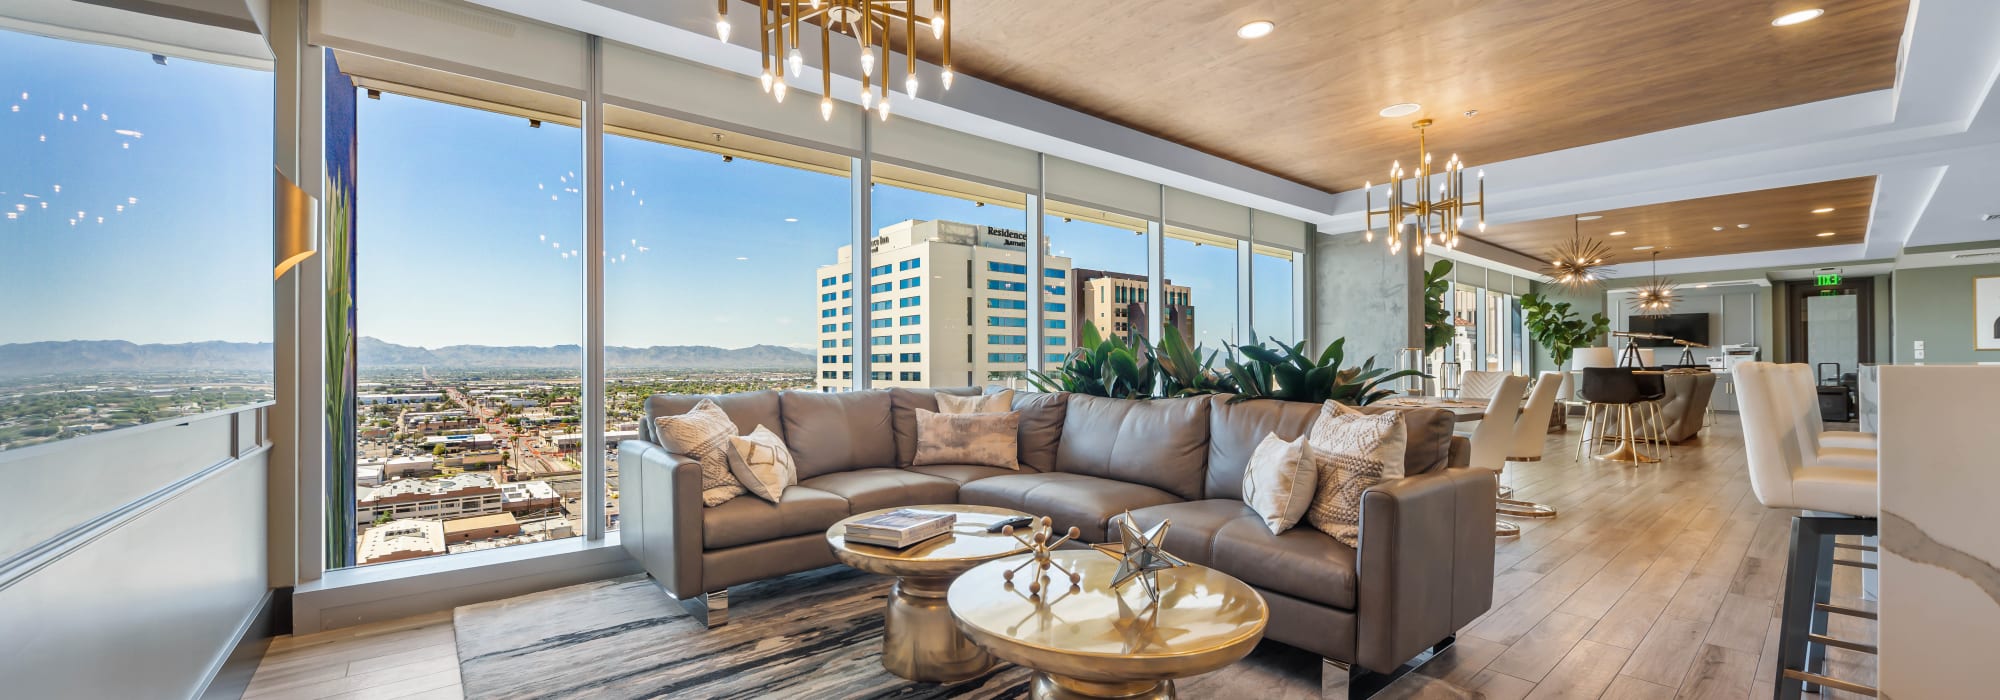 Luxury Clubhouse at CityScape Residences in Phoenix, Arizona